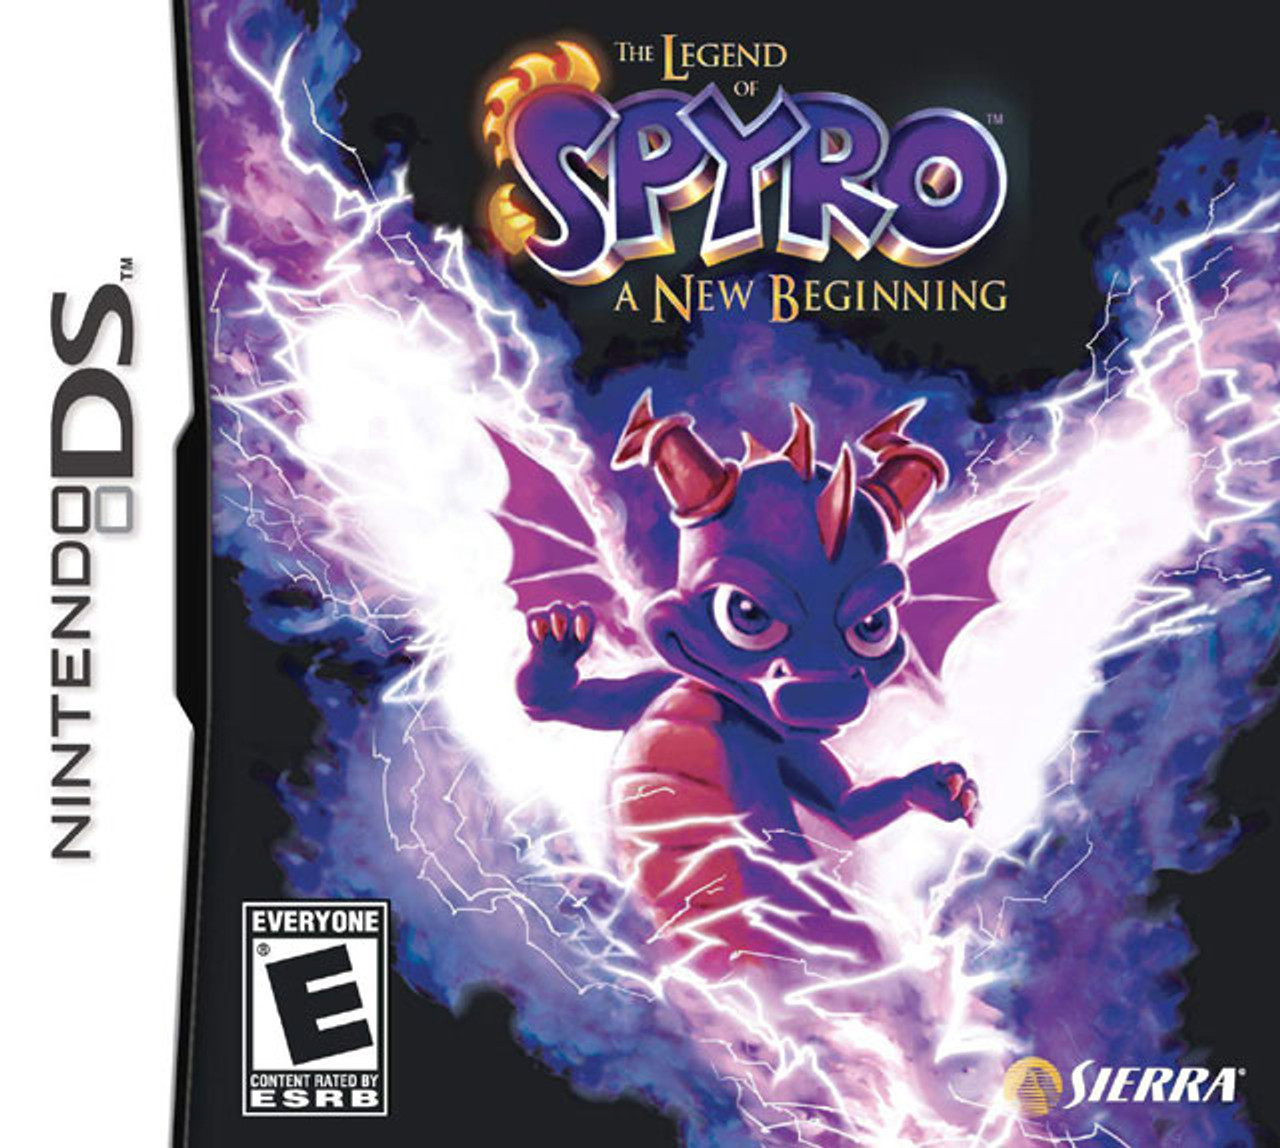 Sword Master NES Game and Spyro the Dragon Original Series Crossover